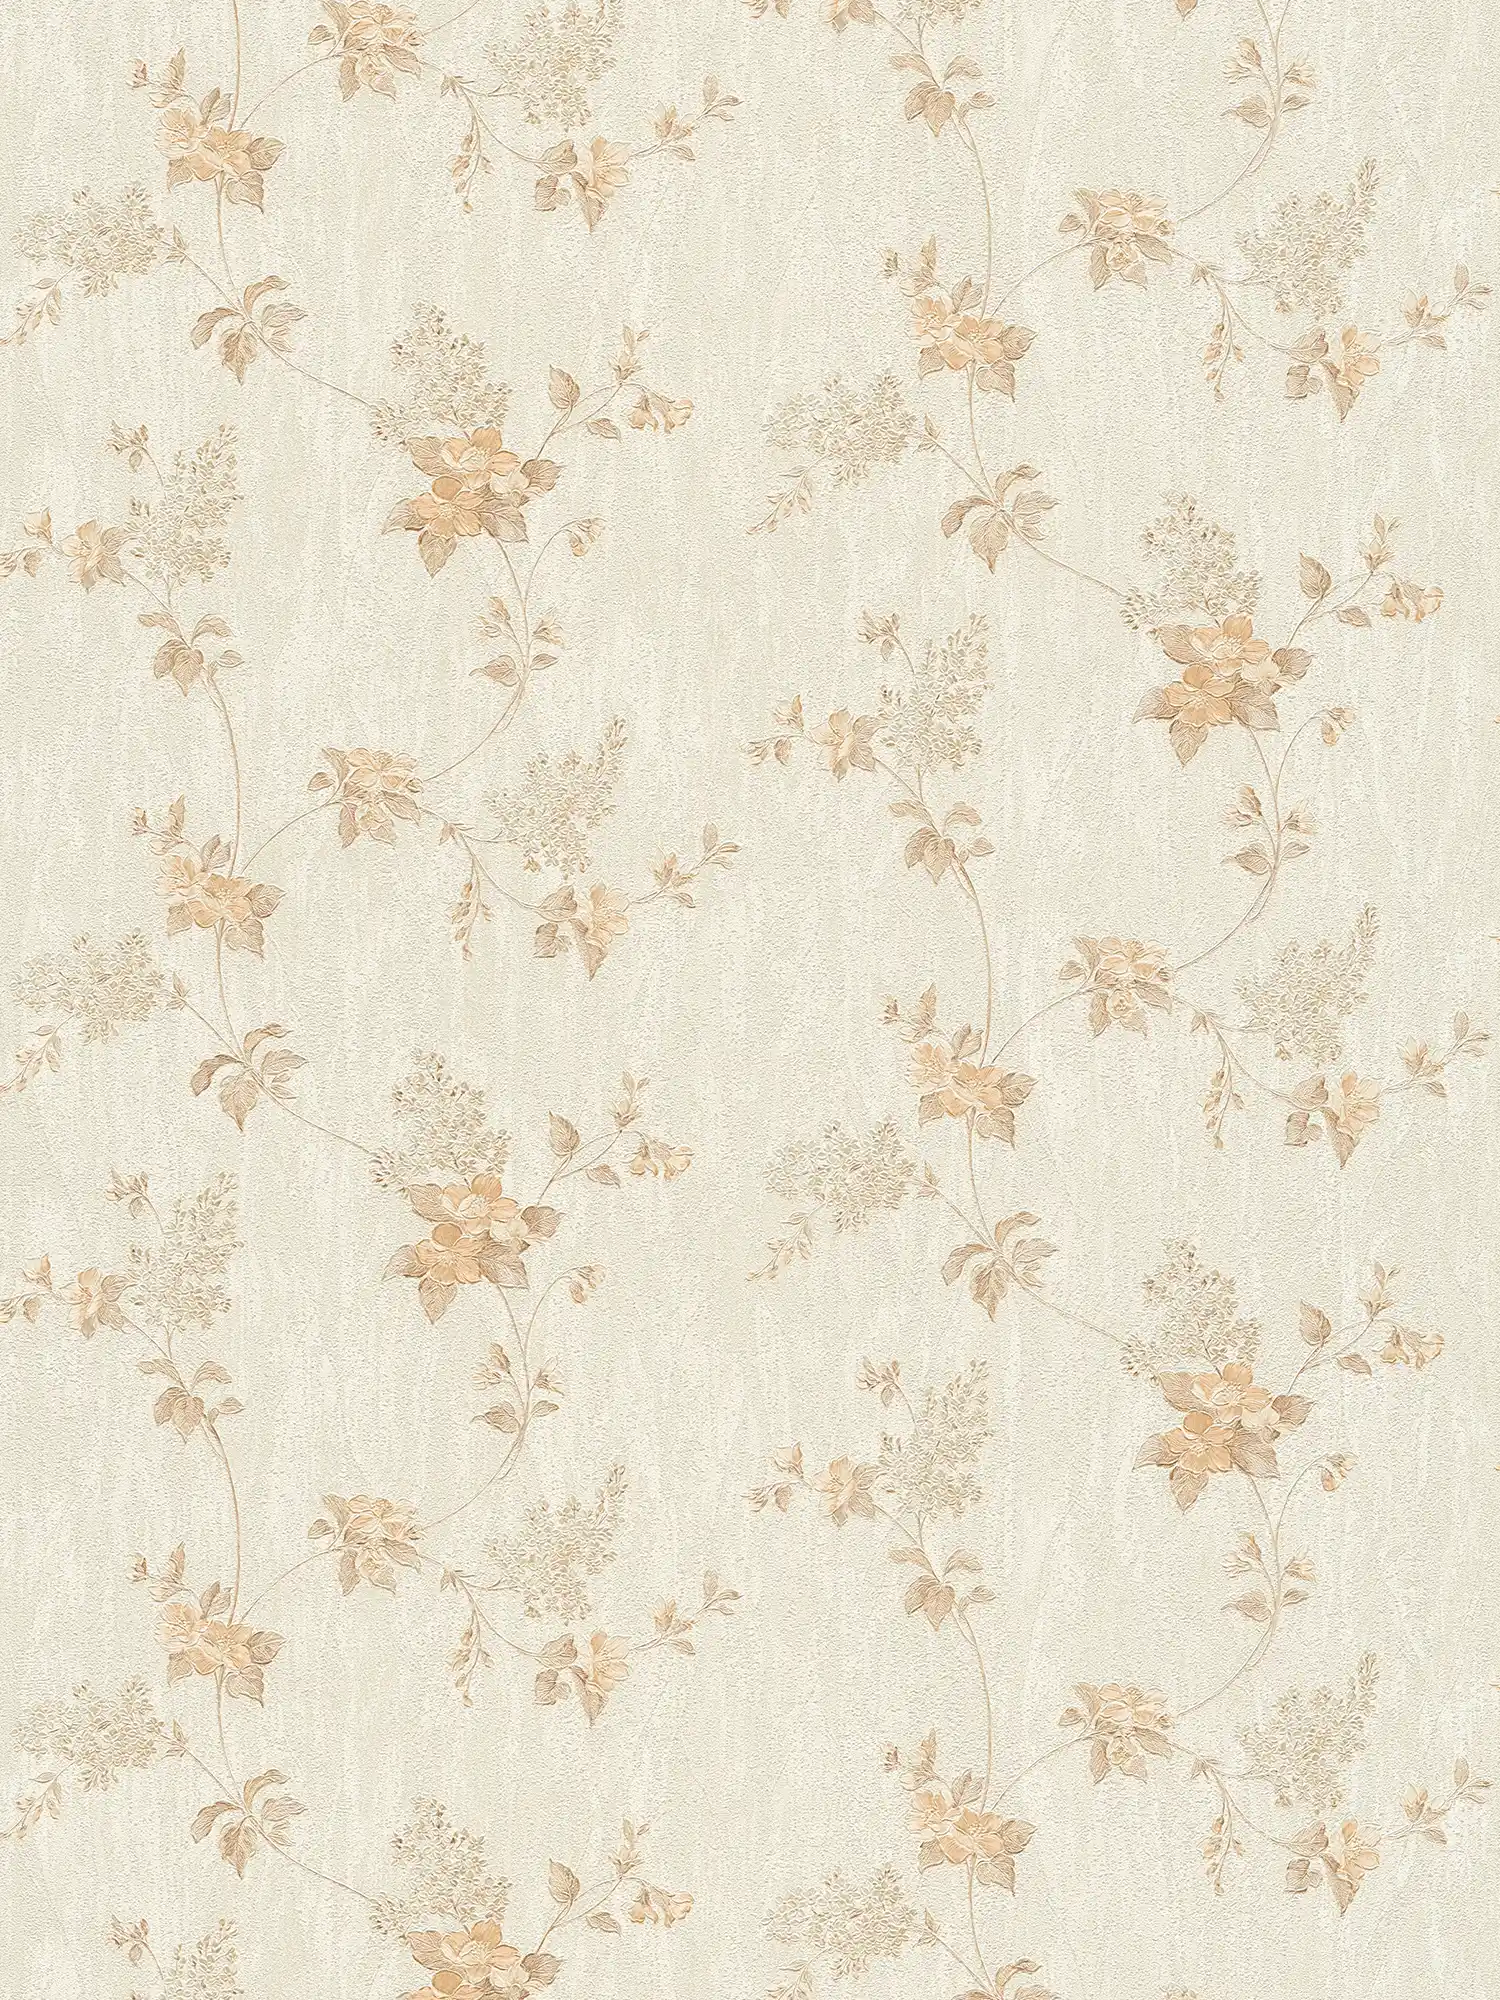 Wallpaper with floral vines & plaster look design - beige
